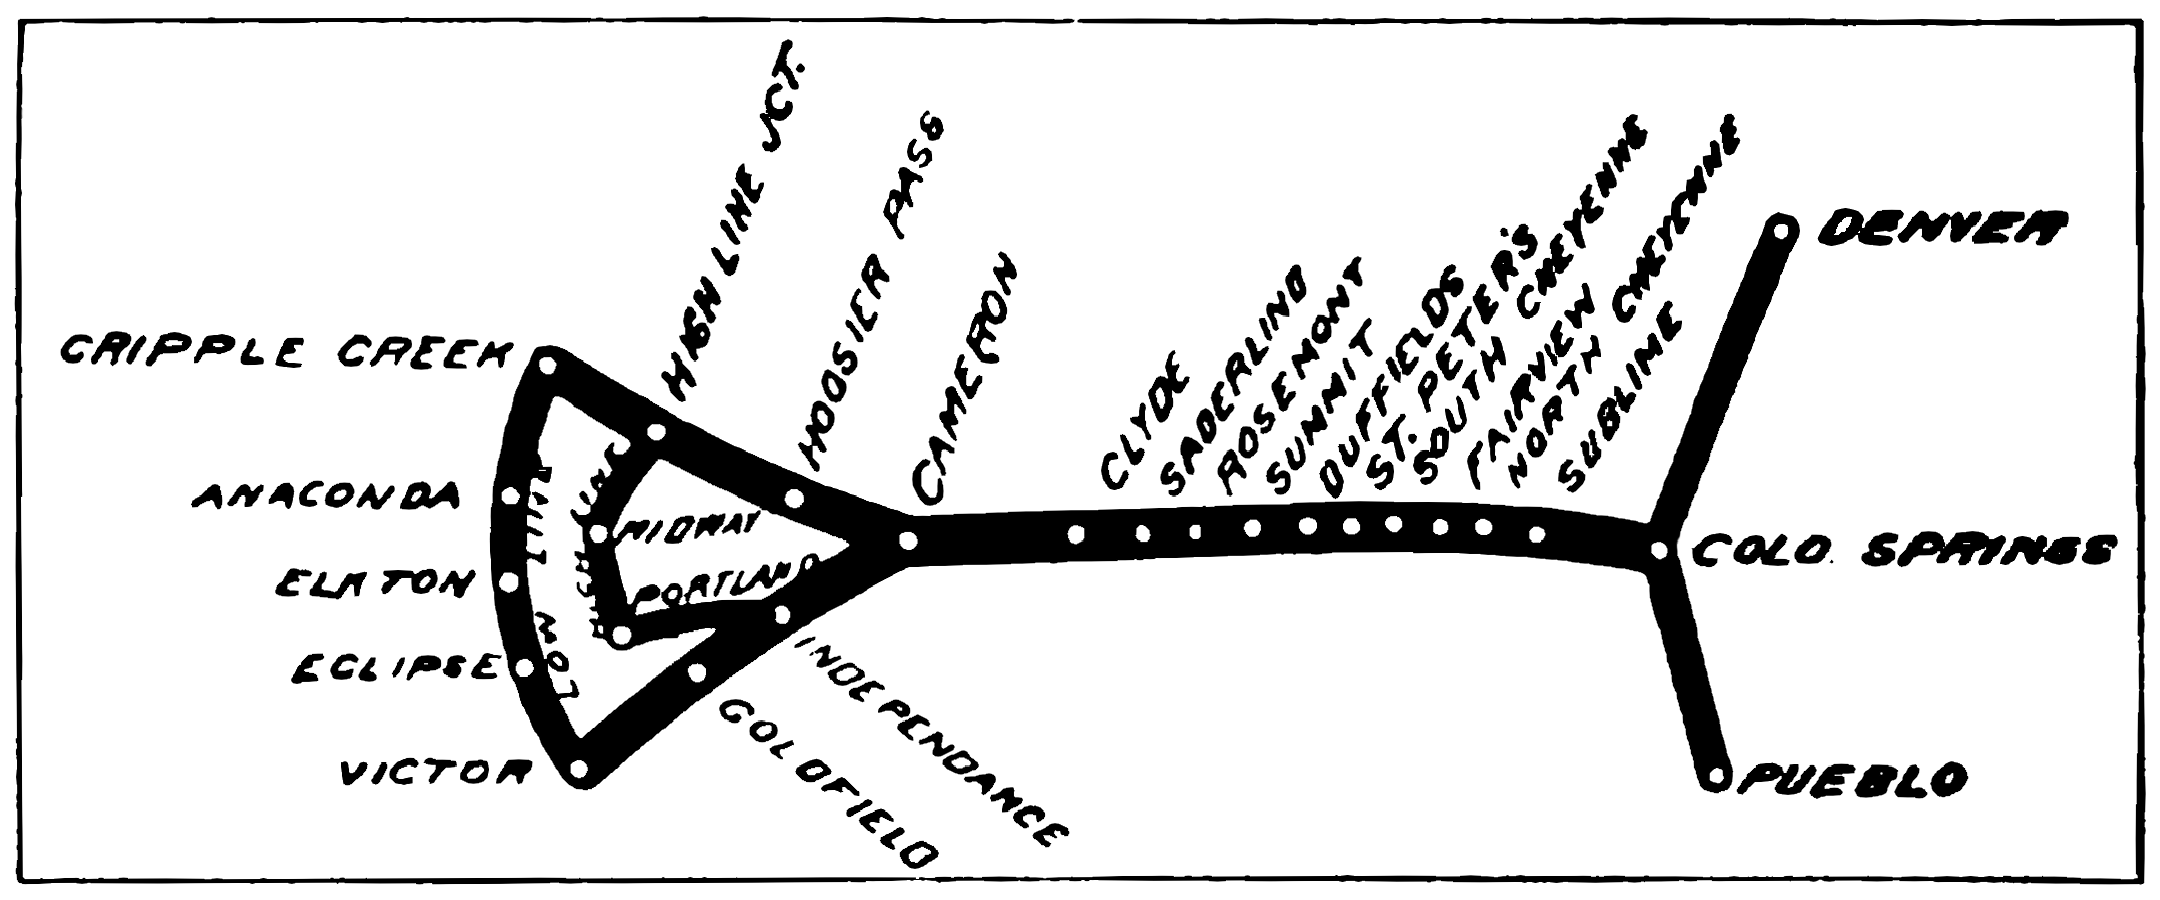 Diagram of the Colorado Springs & Cripple Creek District Railway.